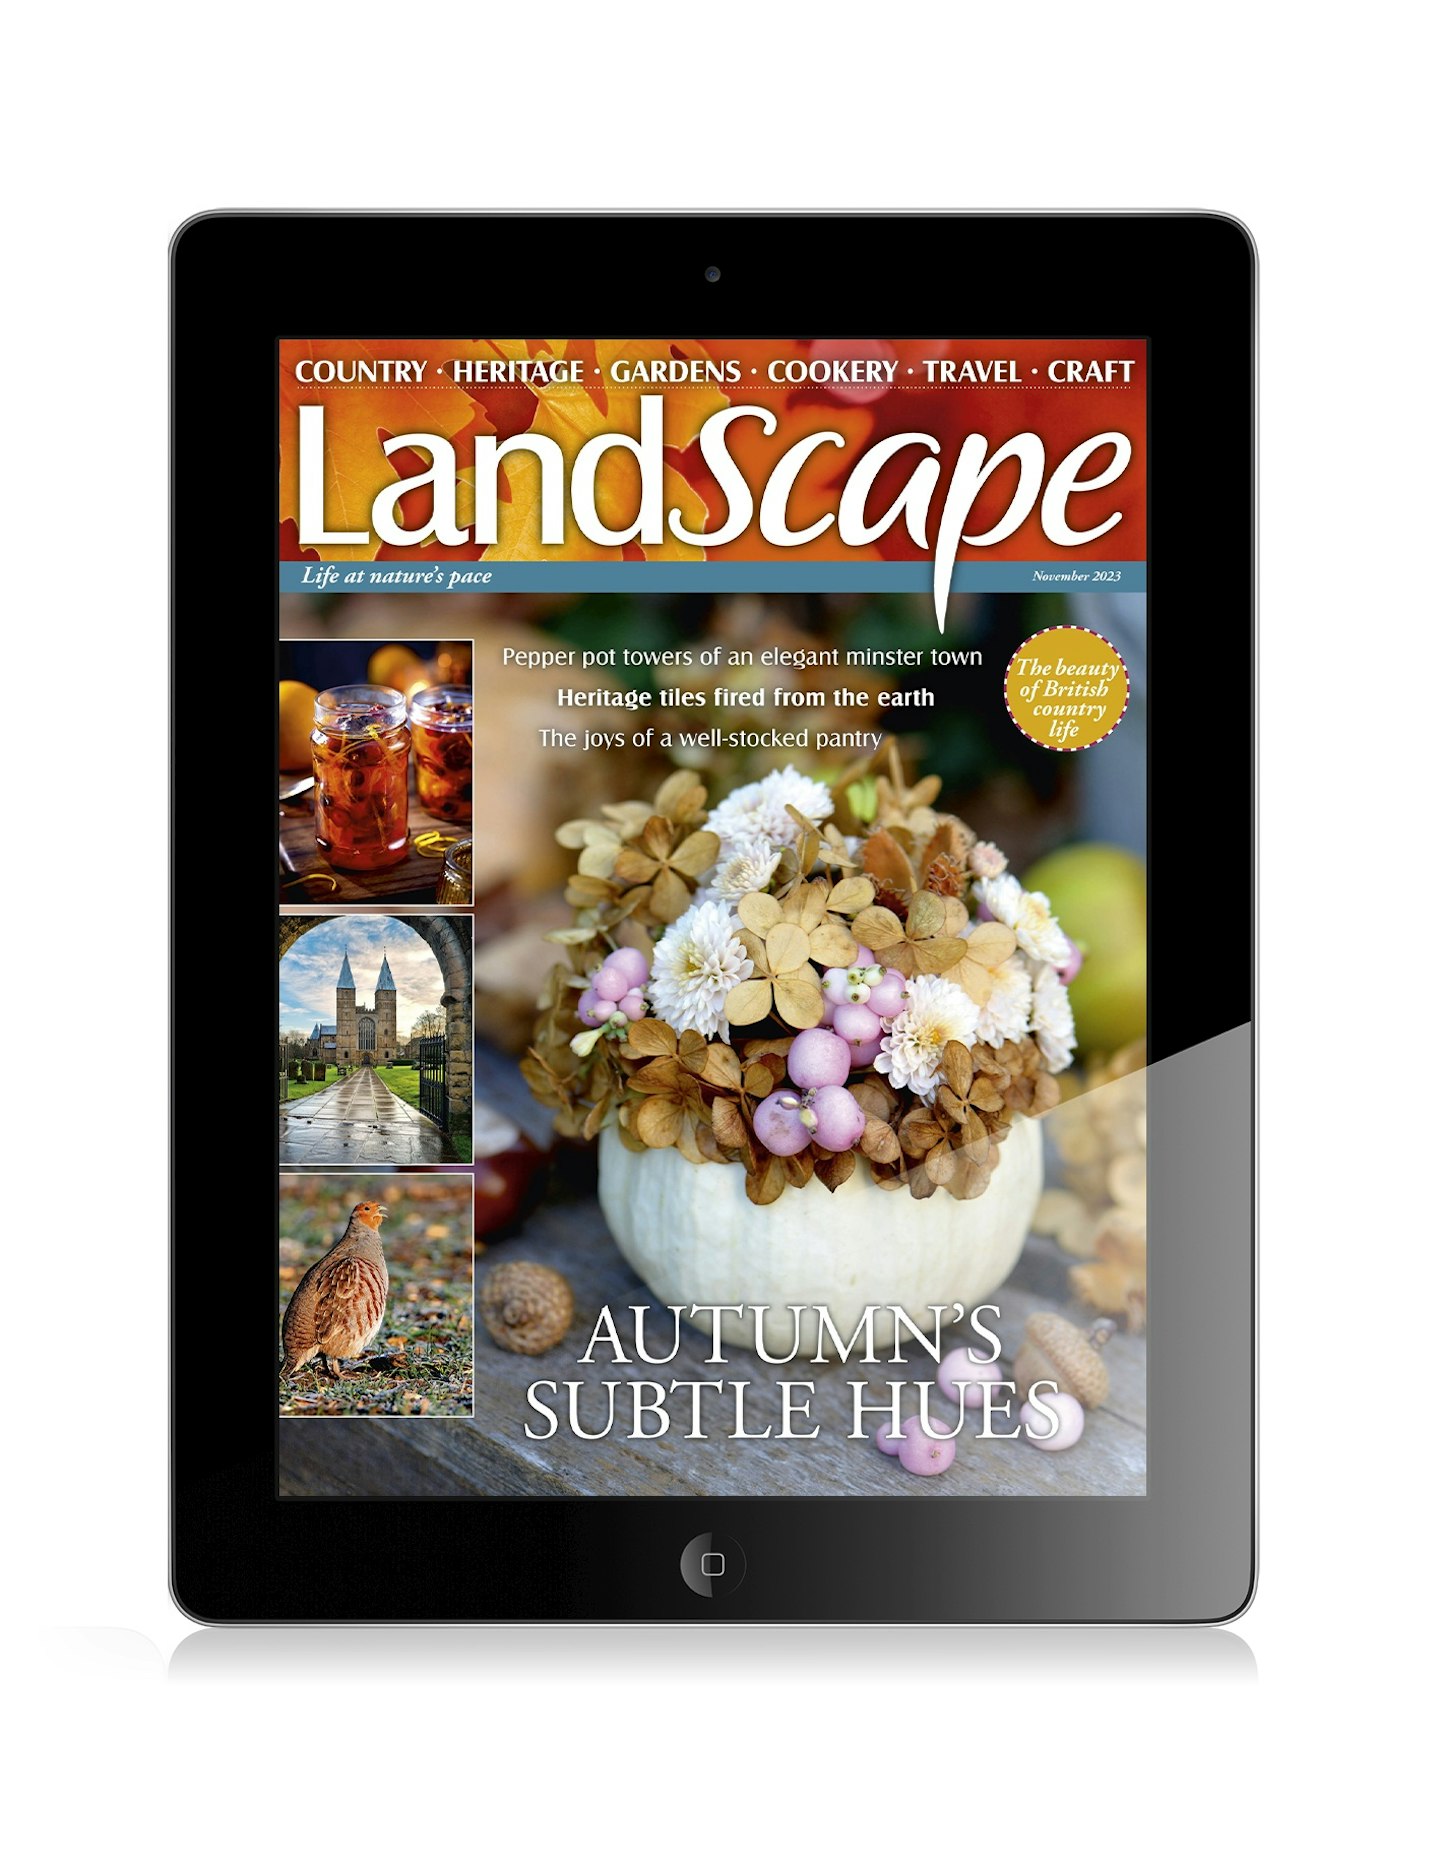 IPAD issue for LandScape magazine